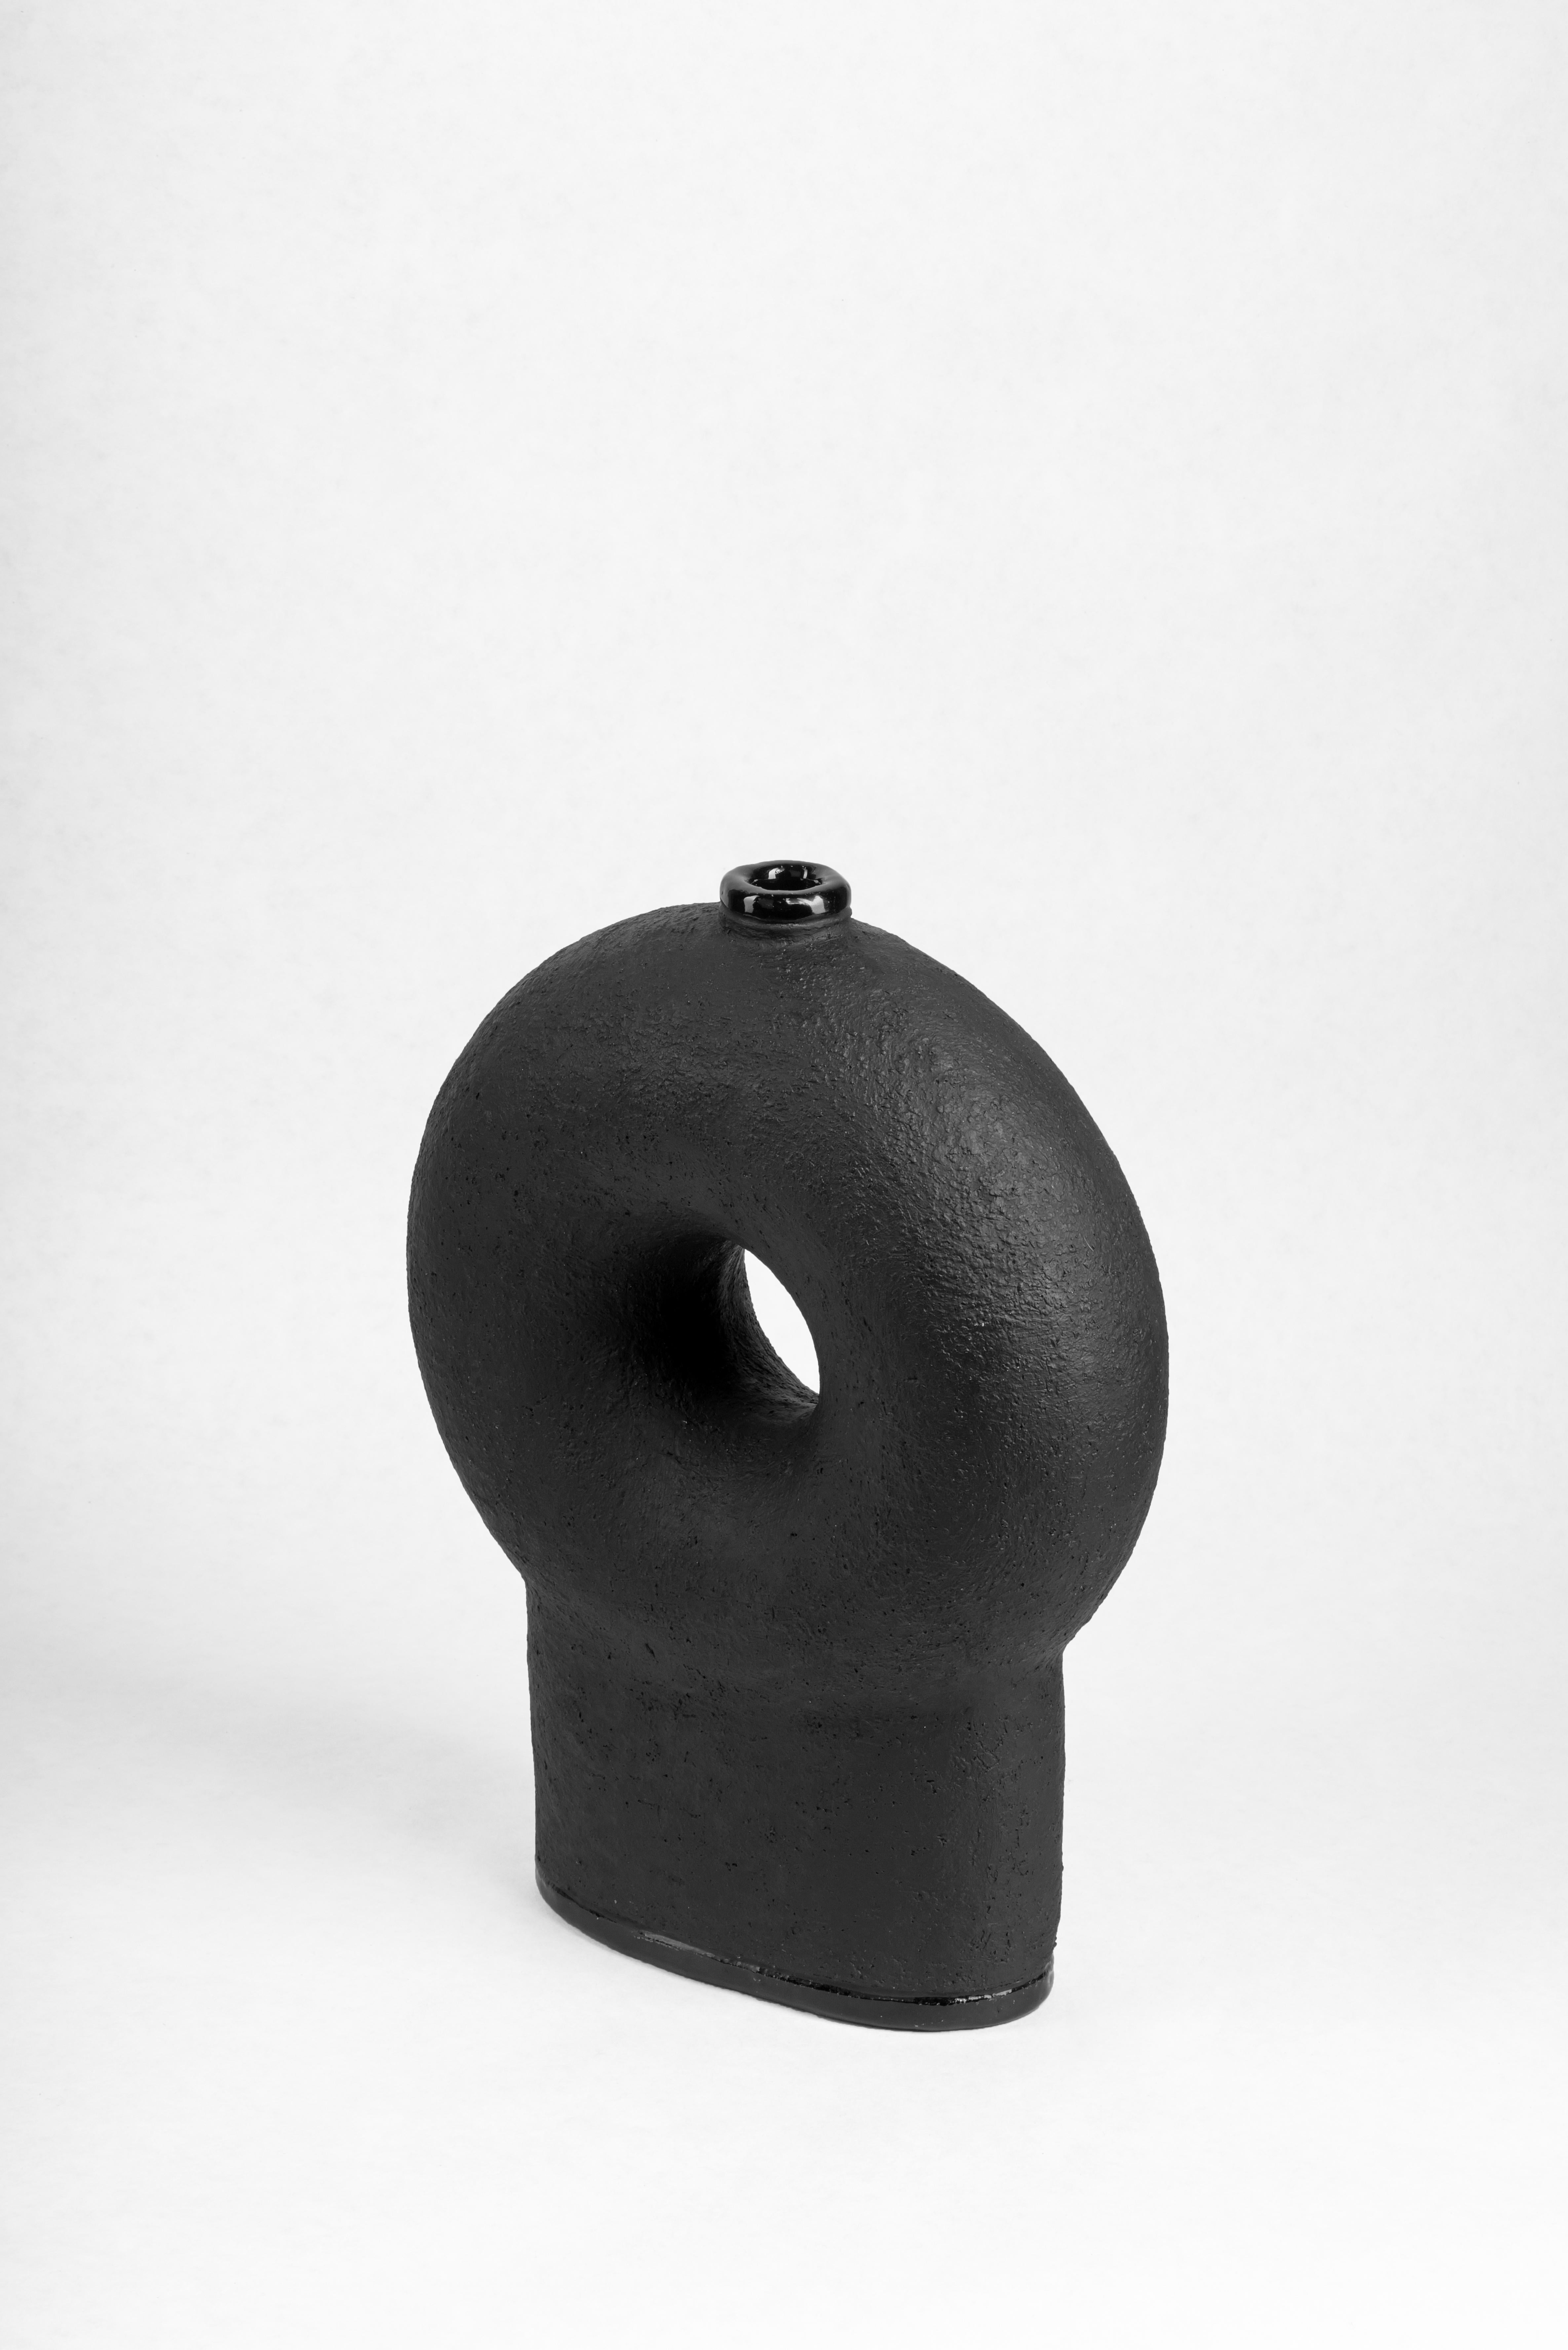 Sculpted Ceramic Vase by FAINA 5